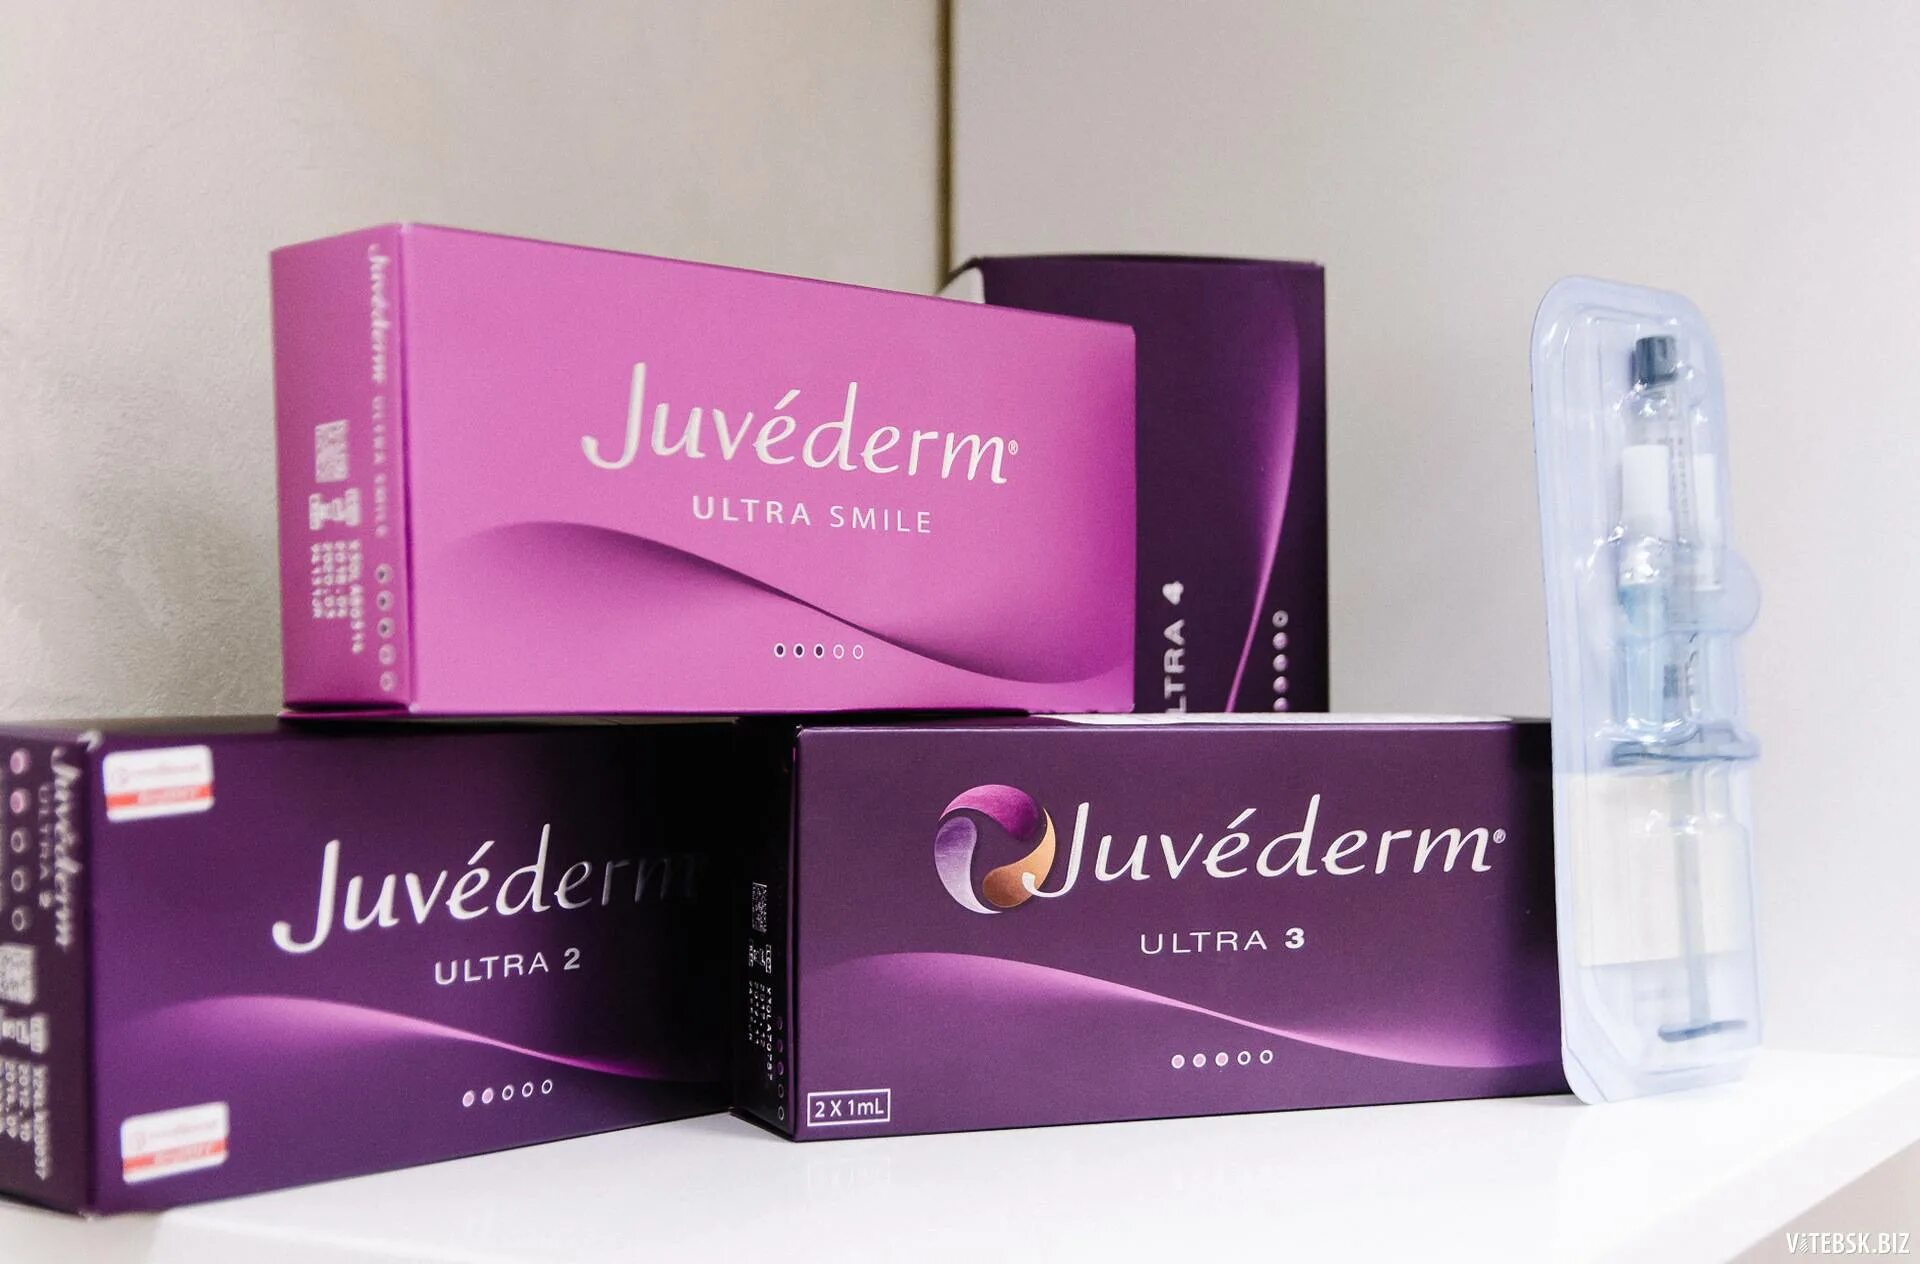 Линейки филлеров. Juvederm ультра 3. Juvederm Ultra 4, 1мл (Франция). Juvederm Ultra 3, 1мл, (Франция). Ювидерм 0.7 мл.